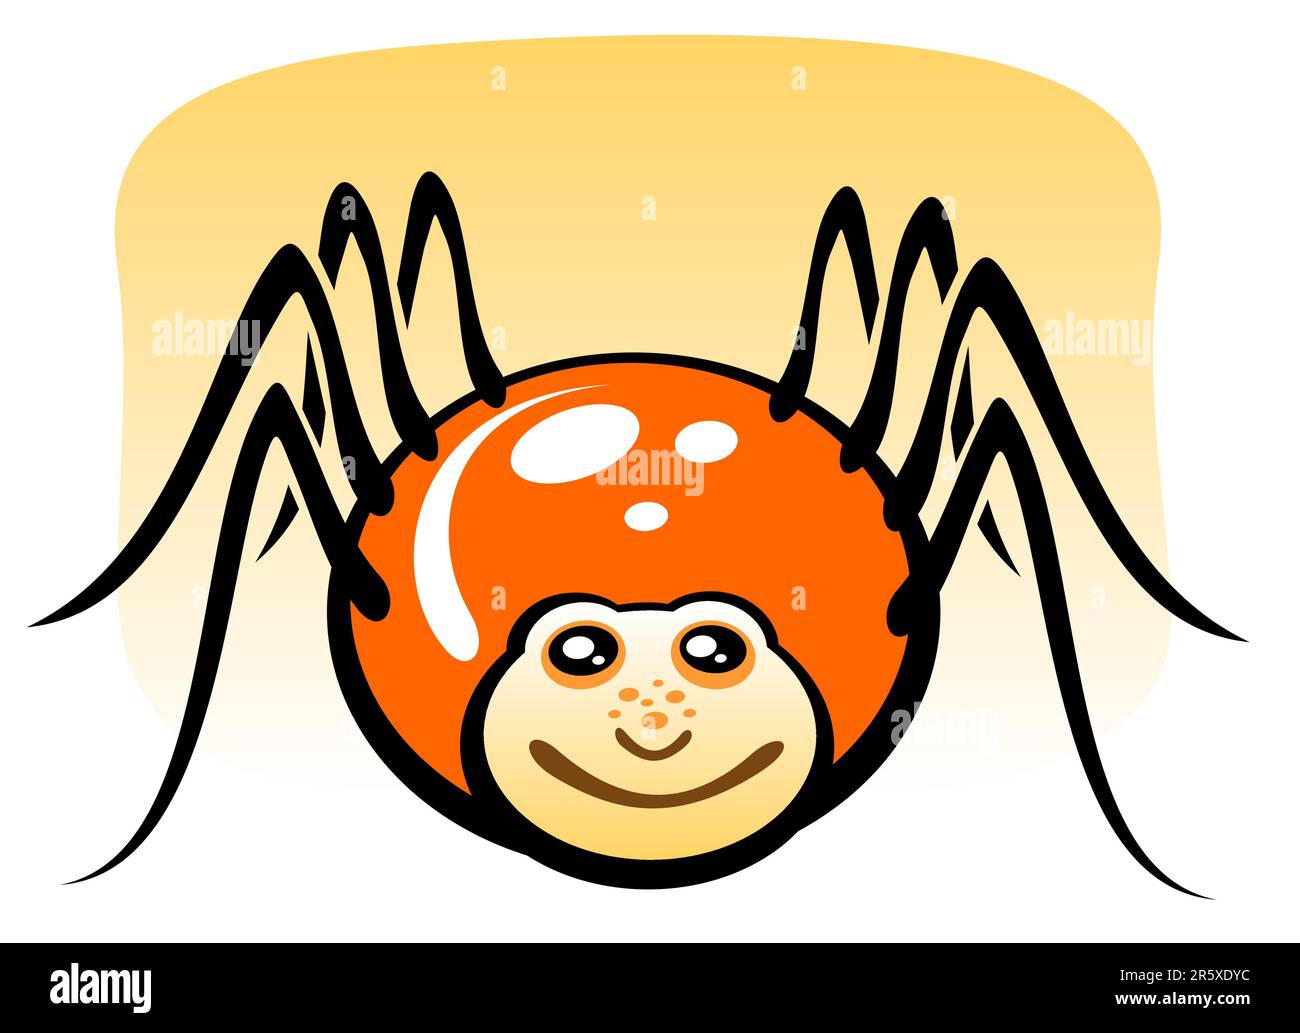 Cartoon spider on a yellow background. Halloween illustration. Stock Vector